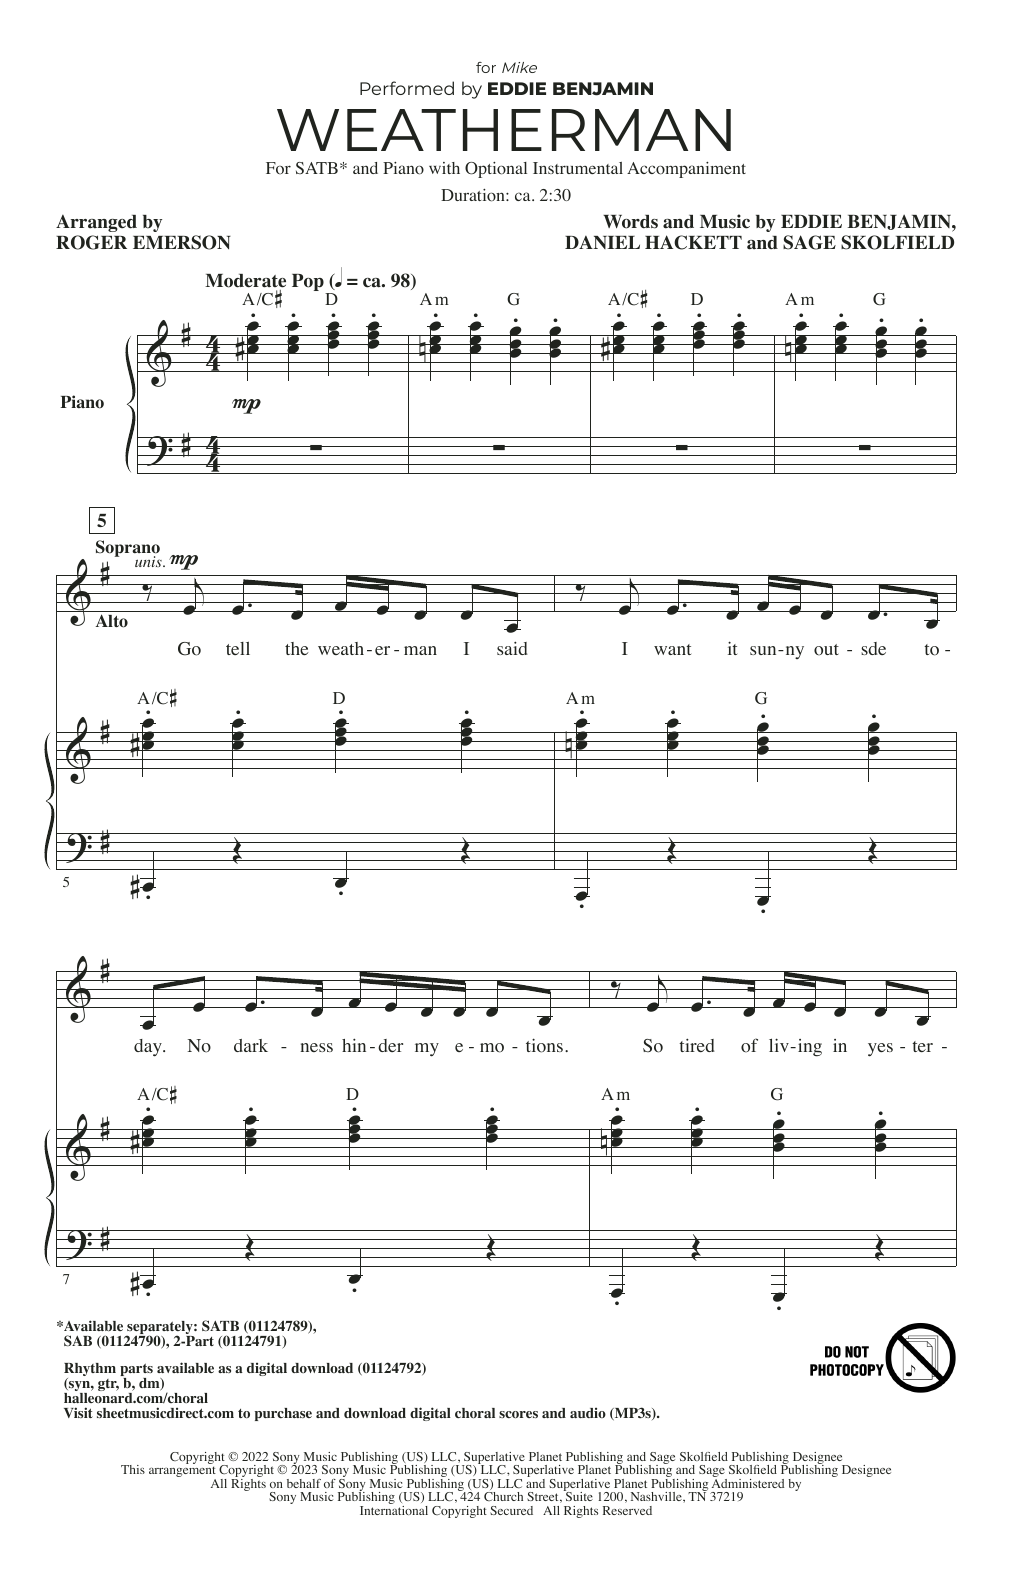 Eddie Benjamin Weatherman (arr. Roger Emerson) Sheet Music Notes & Chords for 2-Part Choir - Download or Print PDF